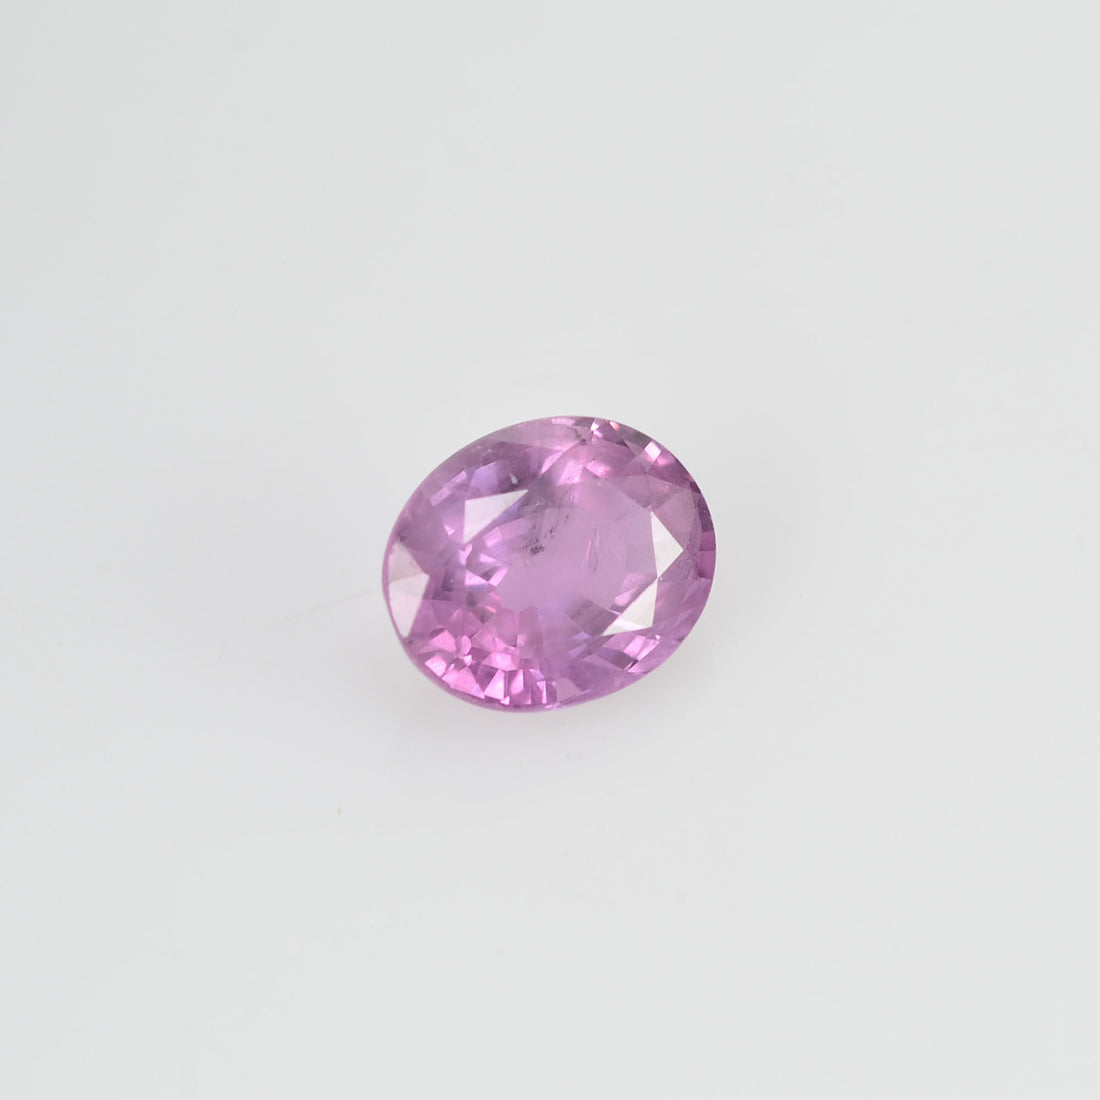 0.76 cts Natural Fancy Pink Sapphire Loose Gemstone oval Cut - Thai Gems Export Ltd.